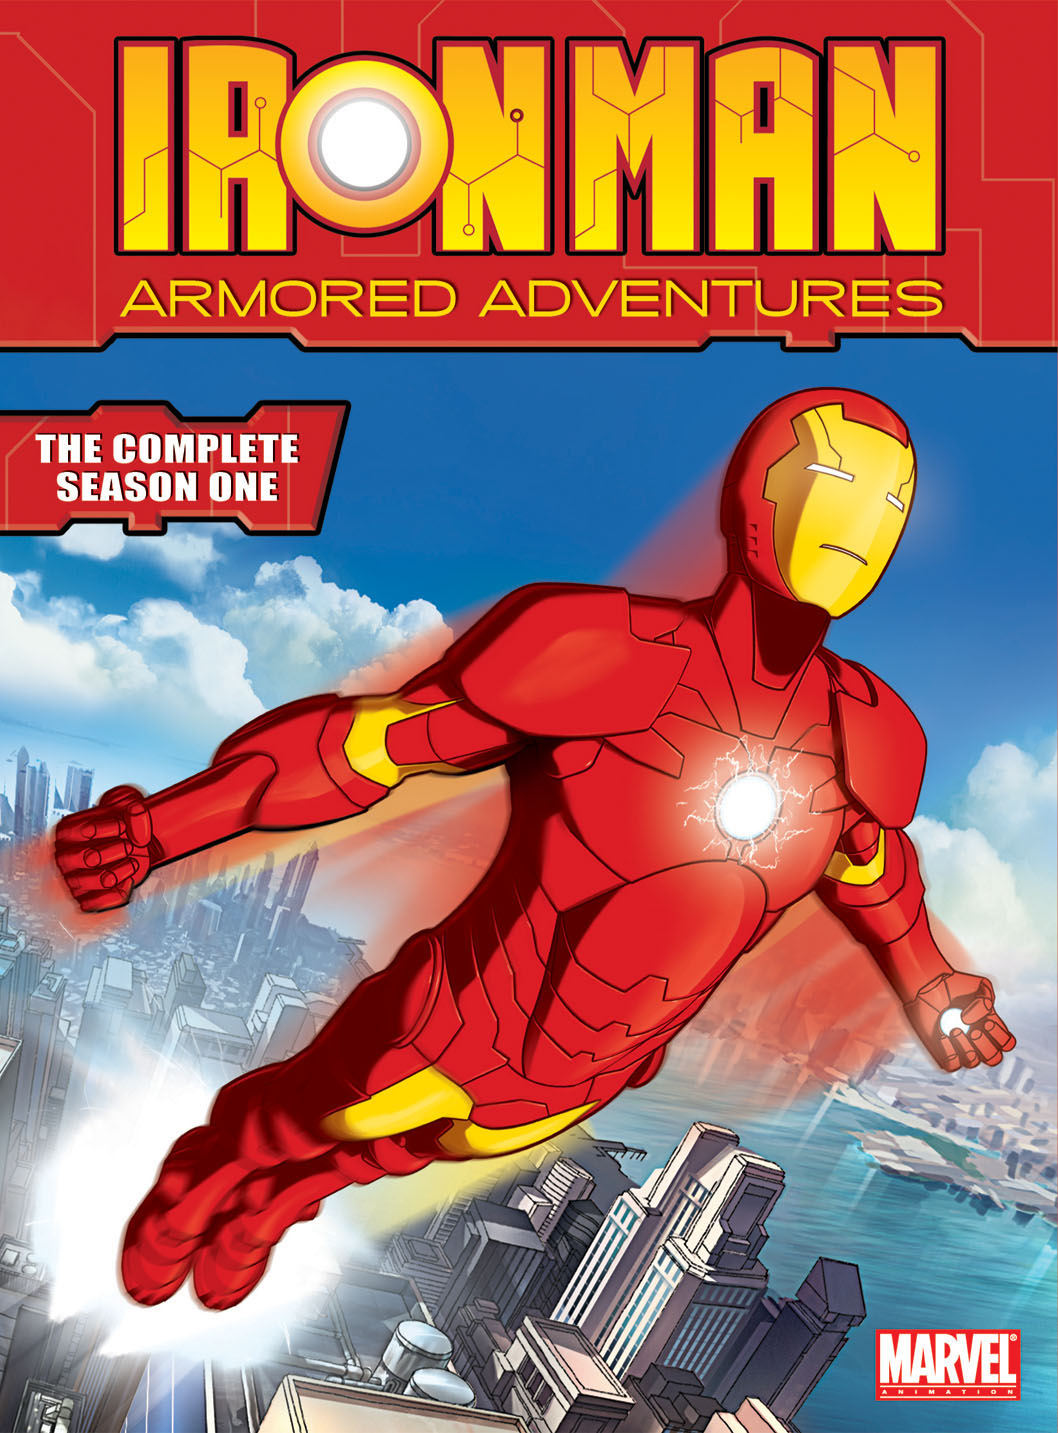 Iron Man Armored Adventures 20   Movie and TV Wiki   Fandom